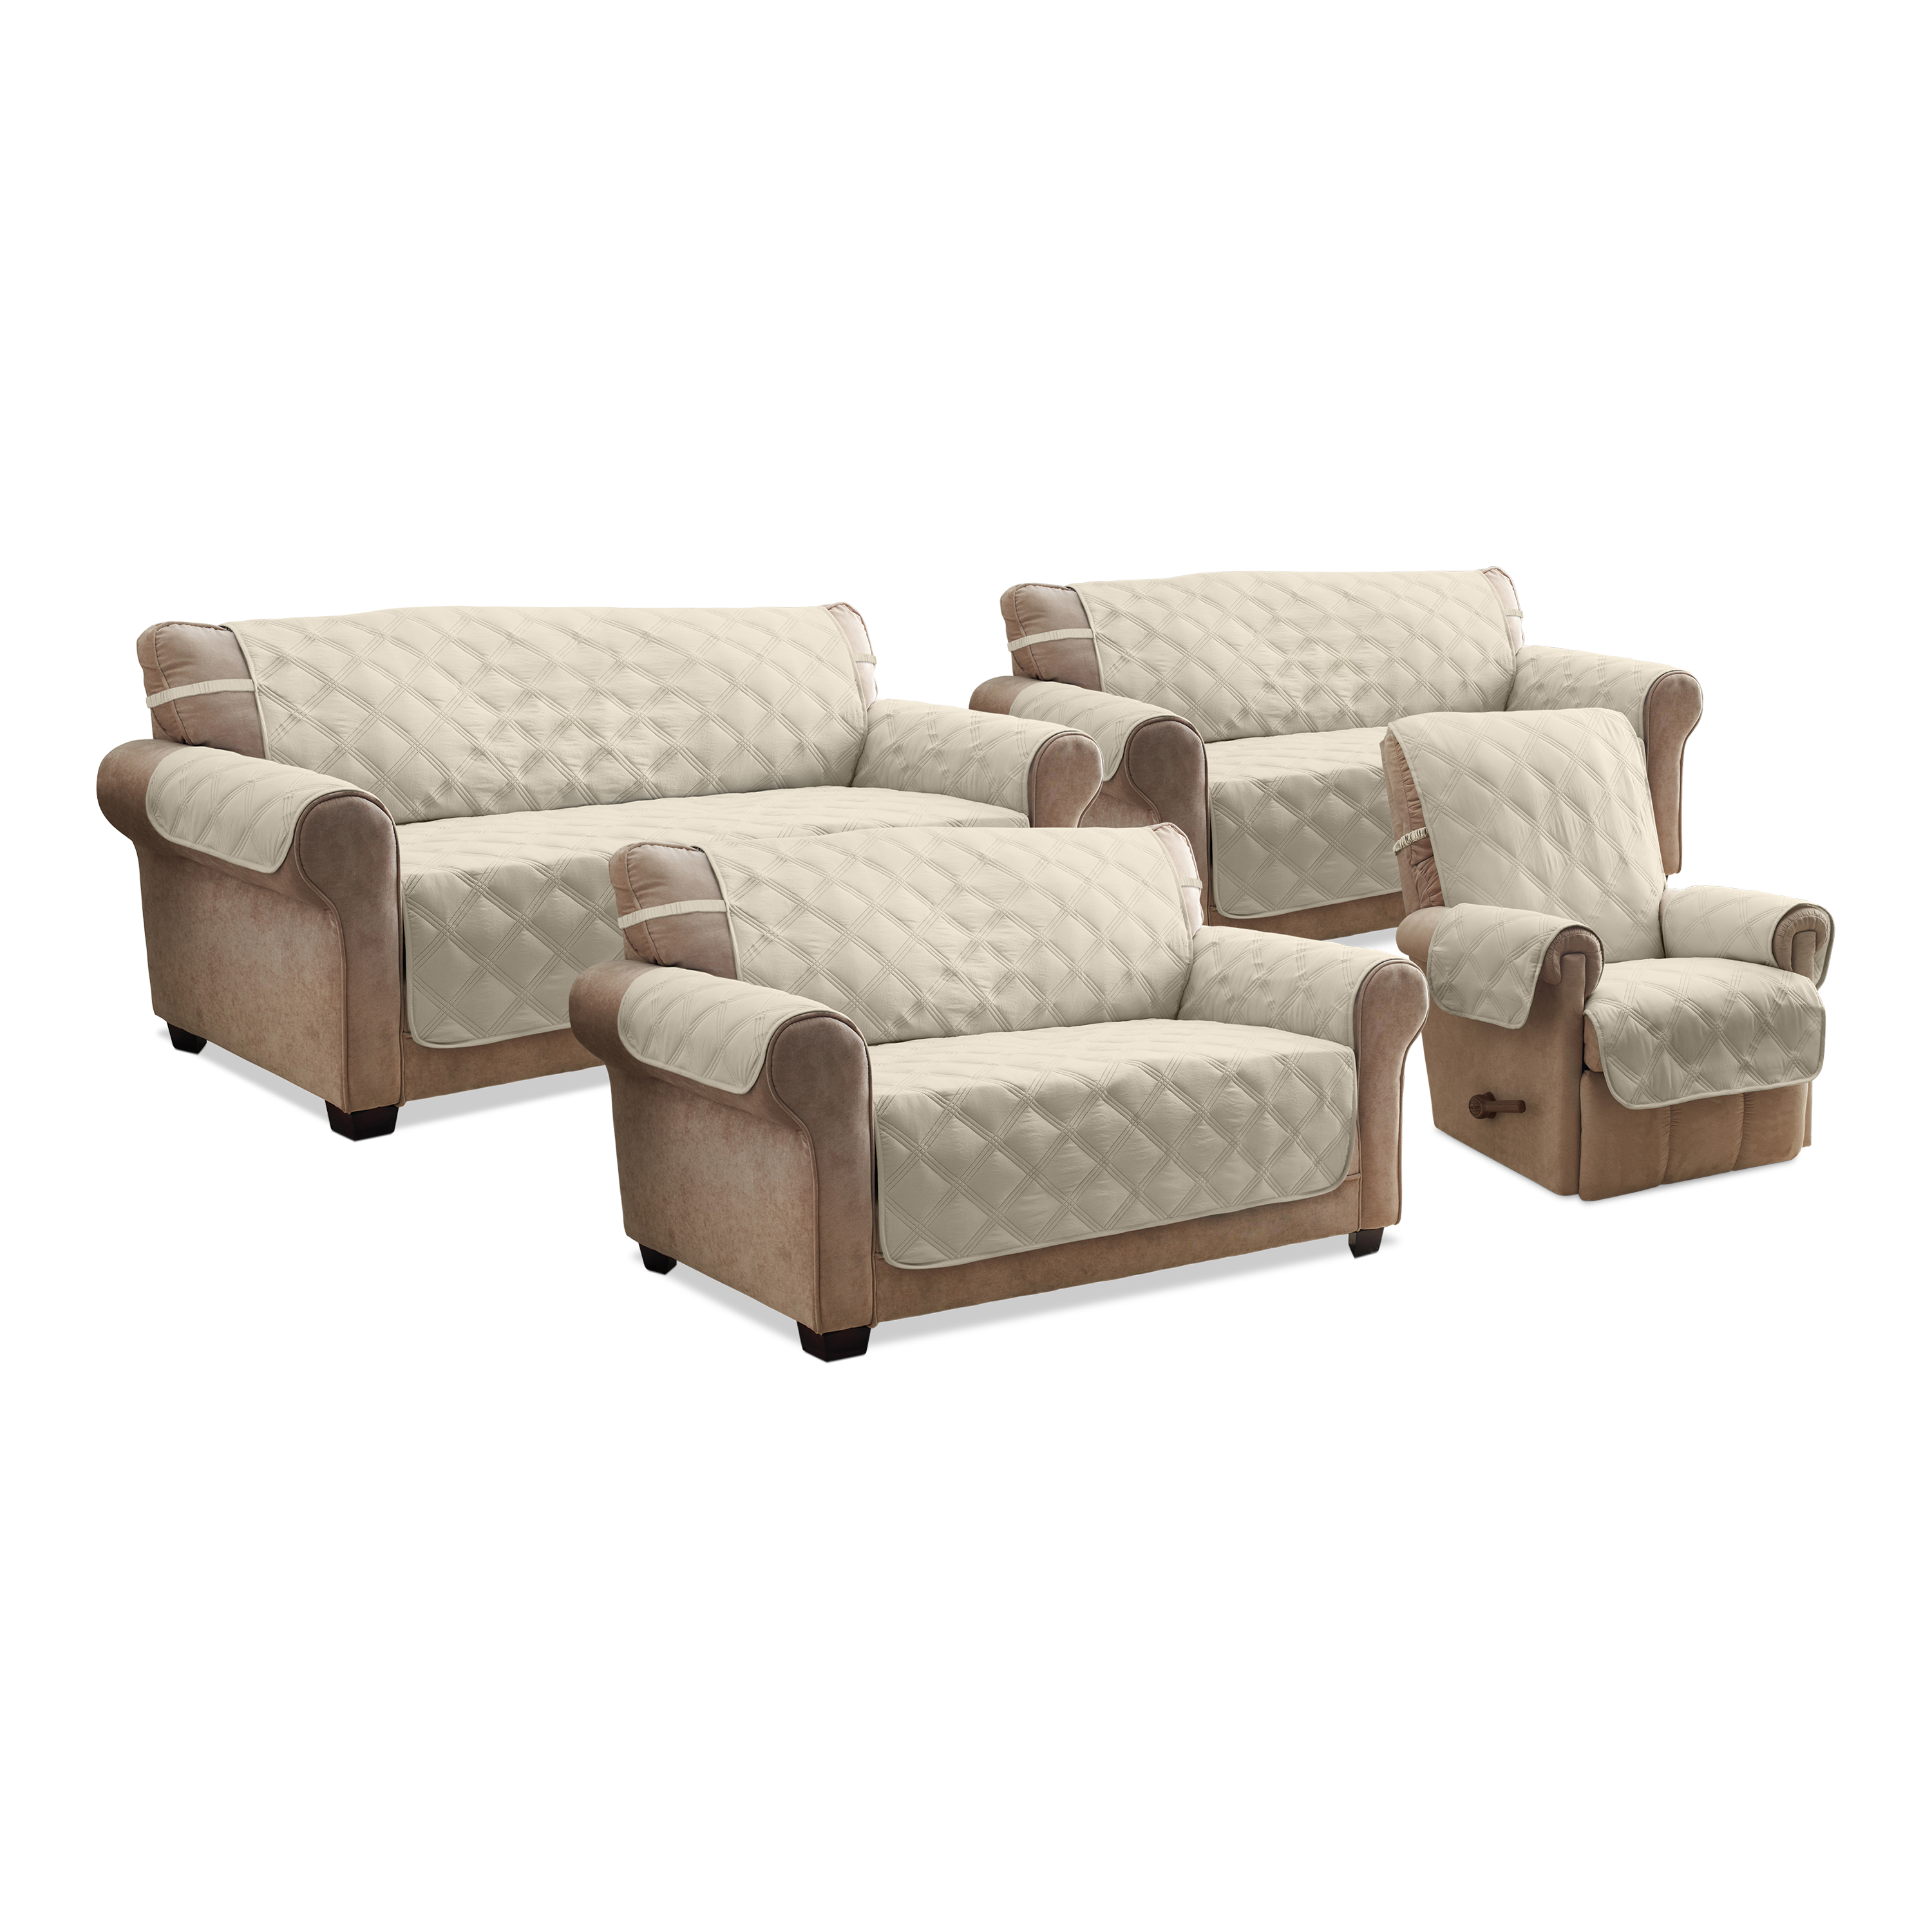 Innovative Textile Solutions 1-piece Hampton Diamond Secure Fit Sofa Furniture Cover, Sand - image 5 of 11